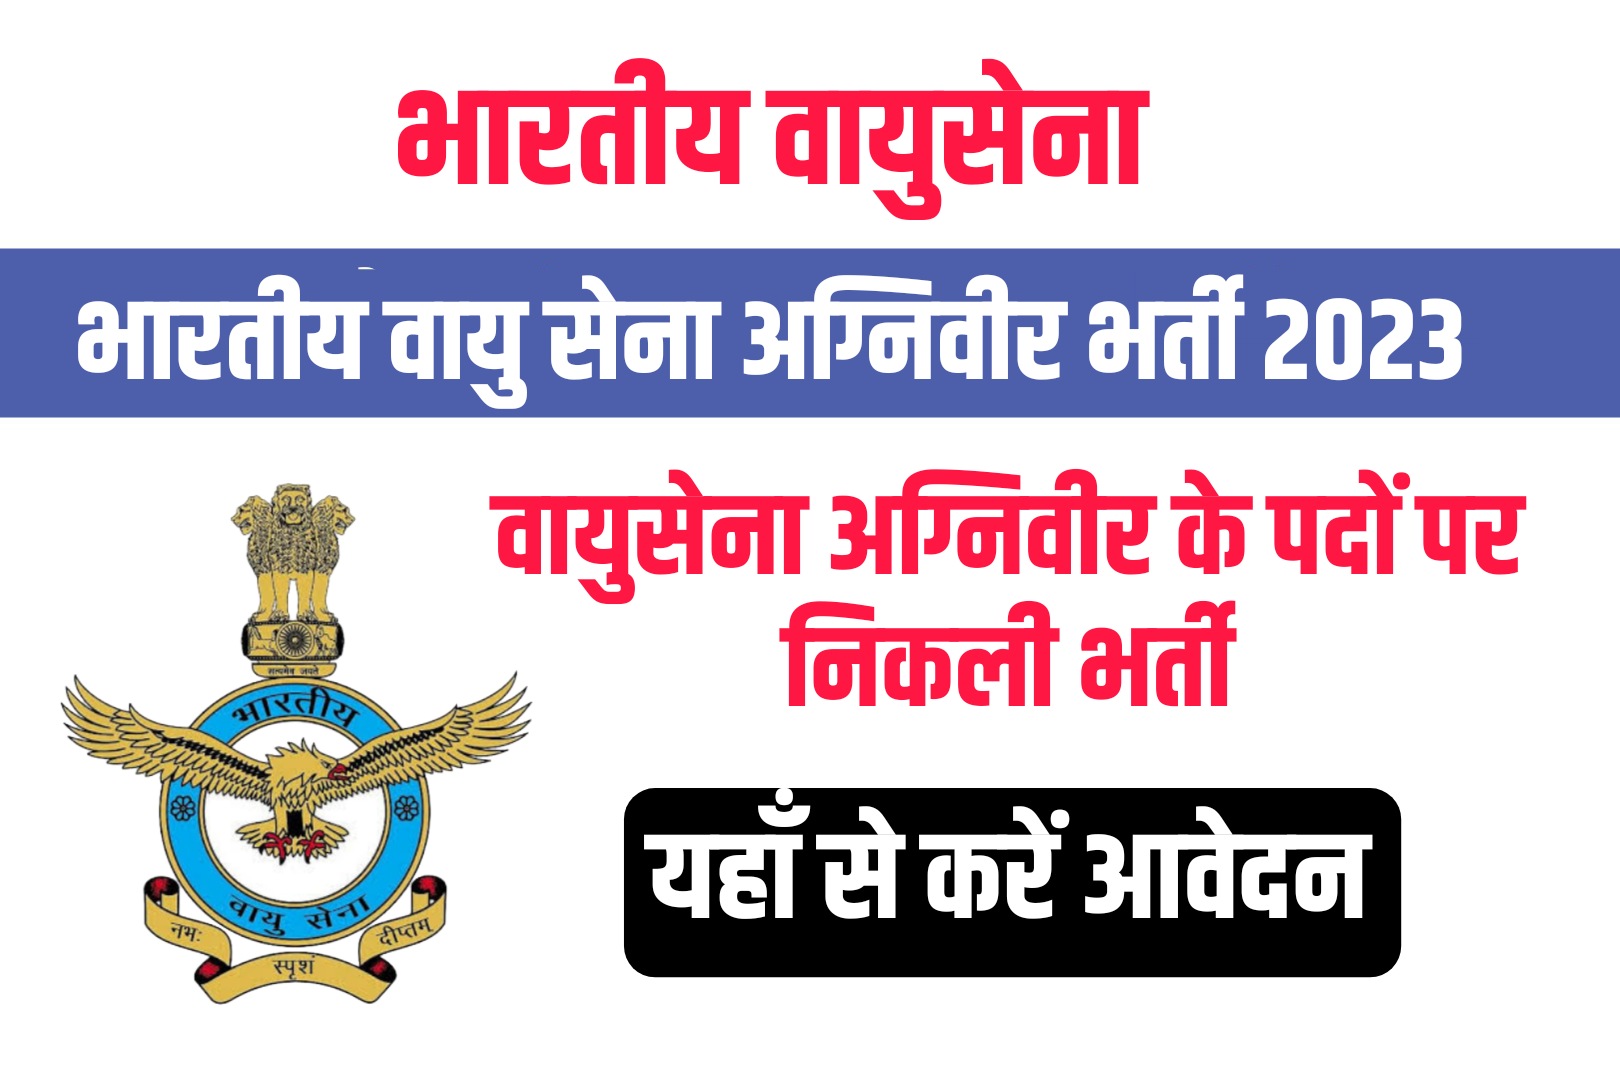 Airforce Agniveer Vayu Intake 02/2023 Recruitment 2023 Online Form | भारतीय वायु सेना अग्निवीर भर्ती 2023